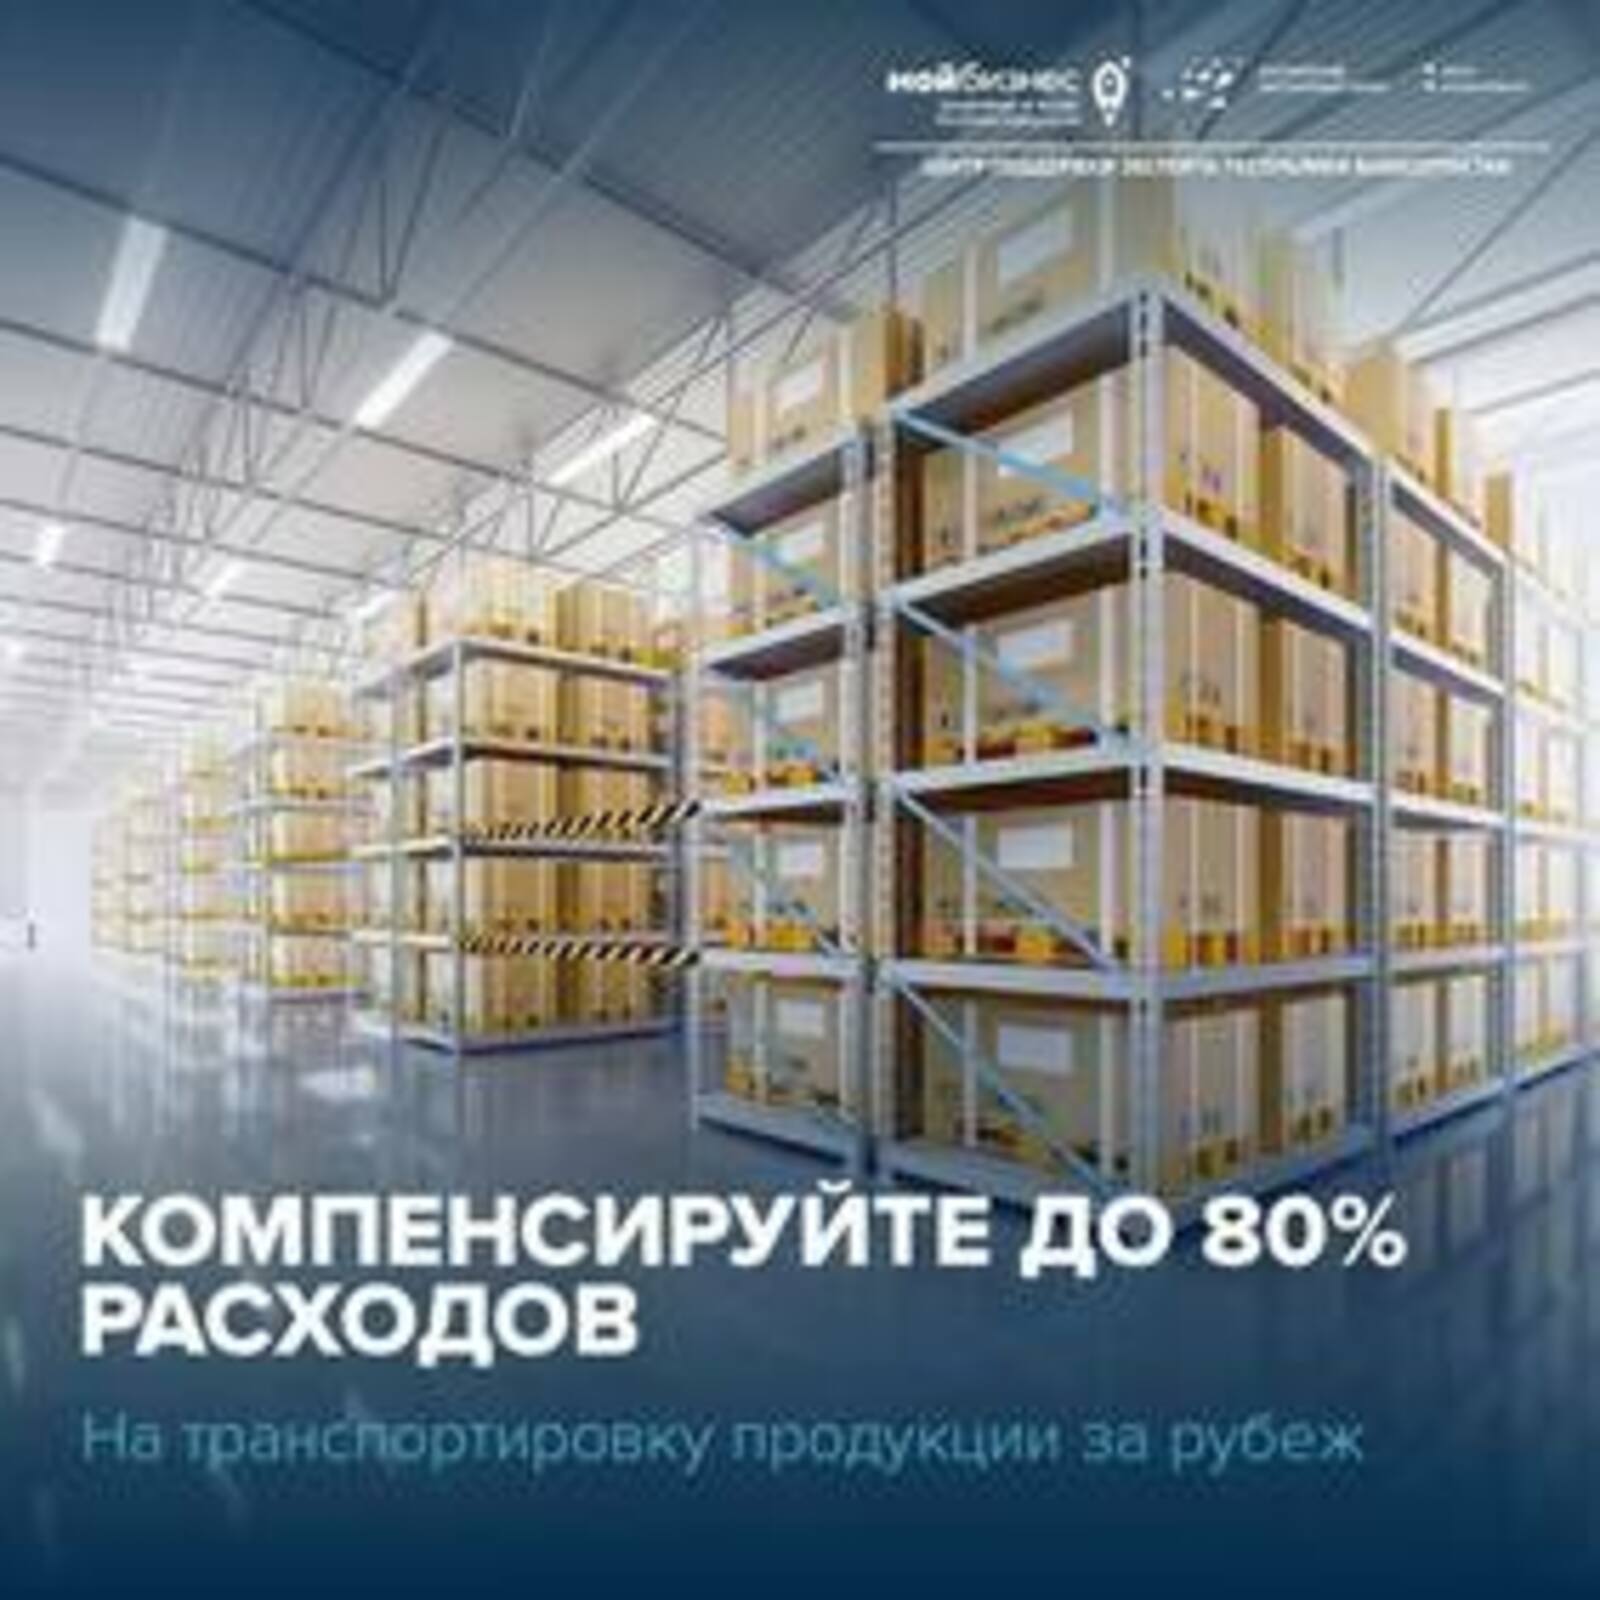 Нацпроект "Международная кооперация и экспорт" Минпромторг РФ и АО «РЭЦ» компенсируют до 80% расходов на транспортировку продукции за рубеж